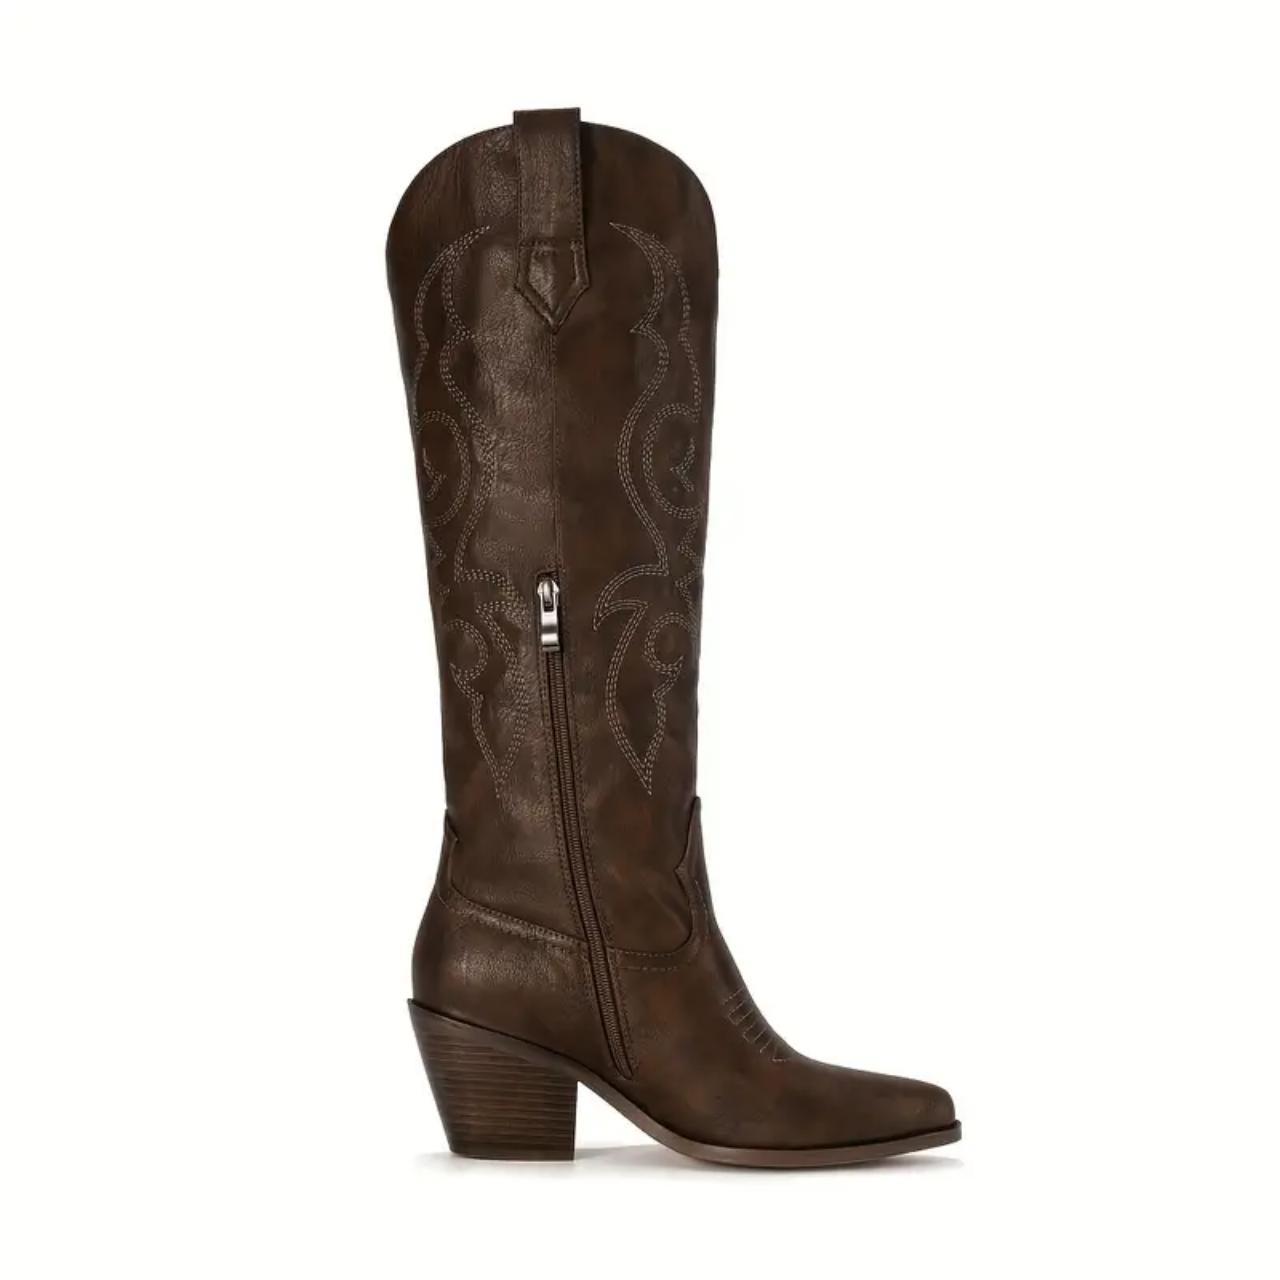 Women's Chunky Heel Cowboy Boots, Fashion Point Toe... - Depop